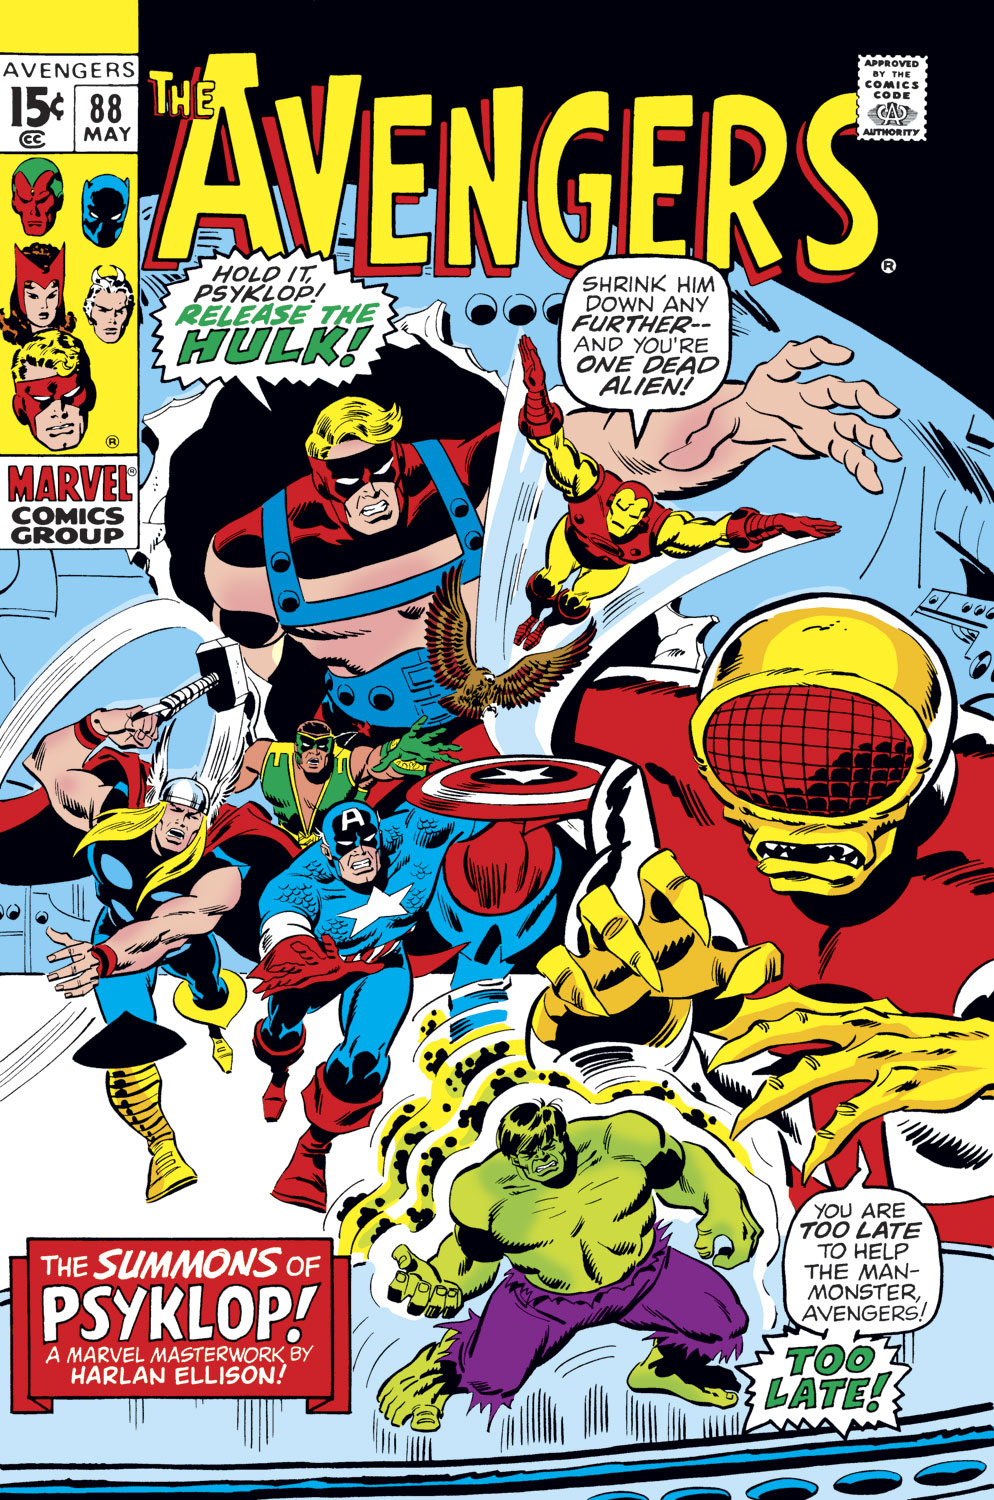 1963-2004 #243 Avengers Vol 1 